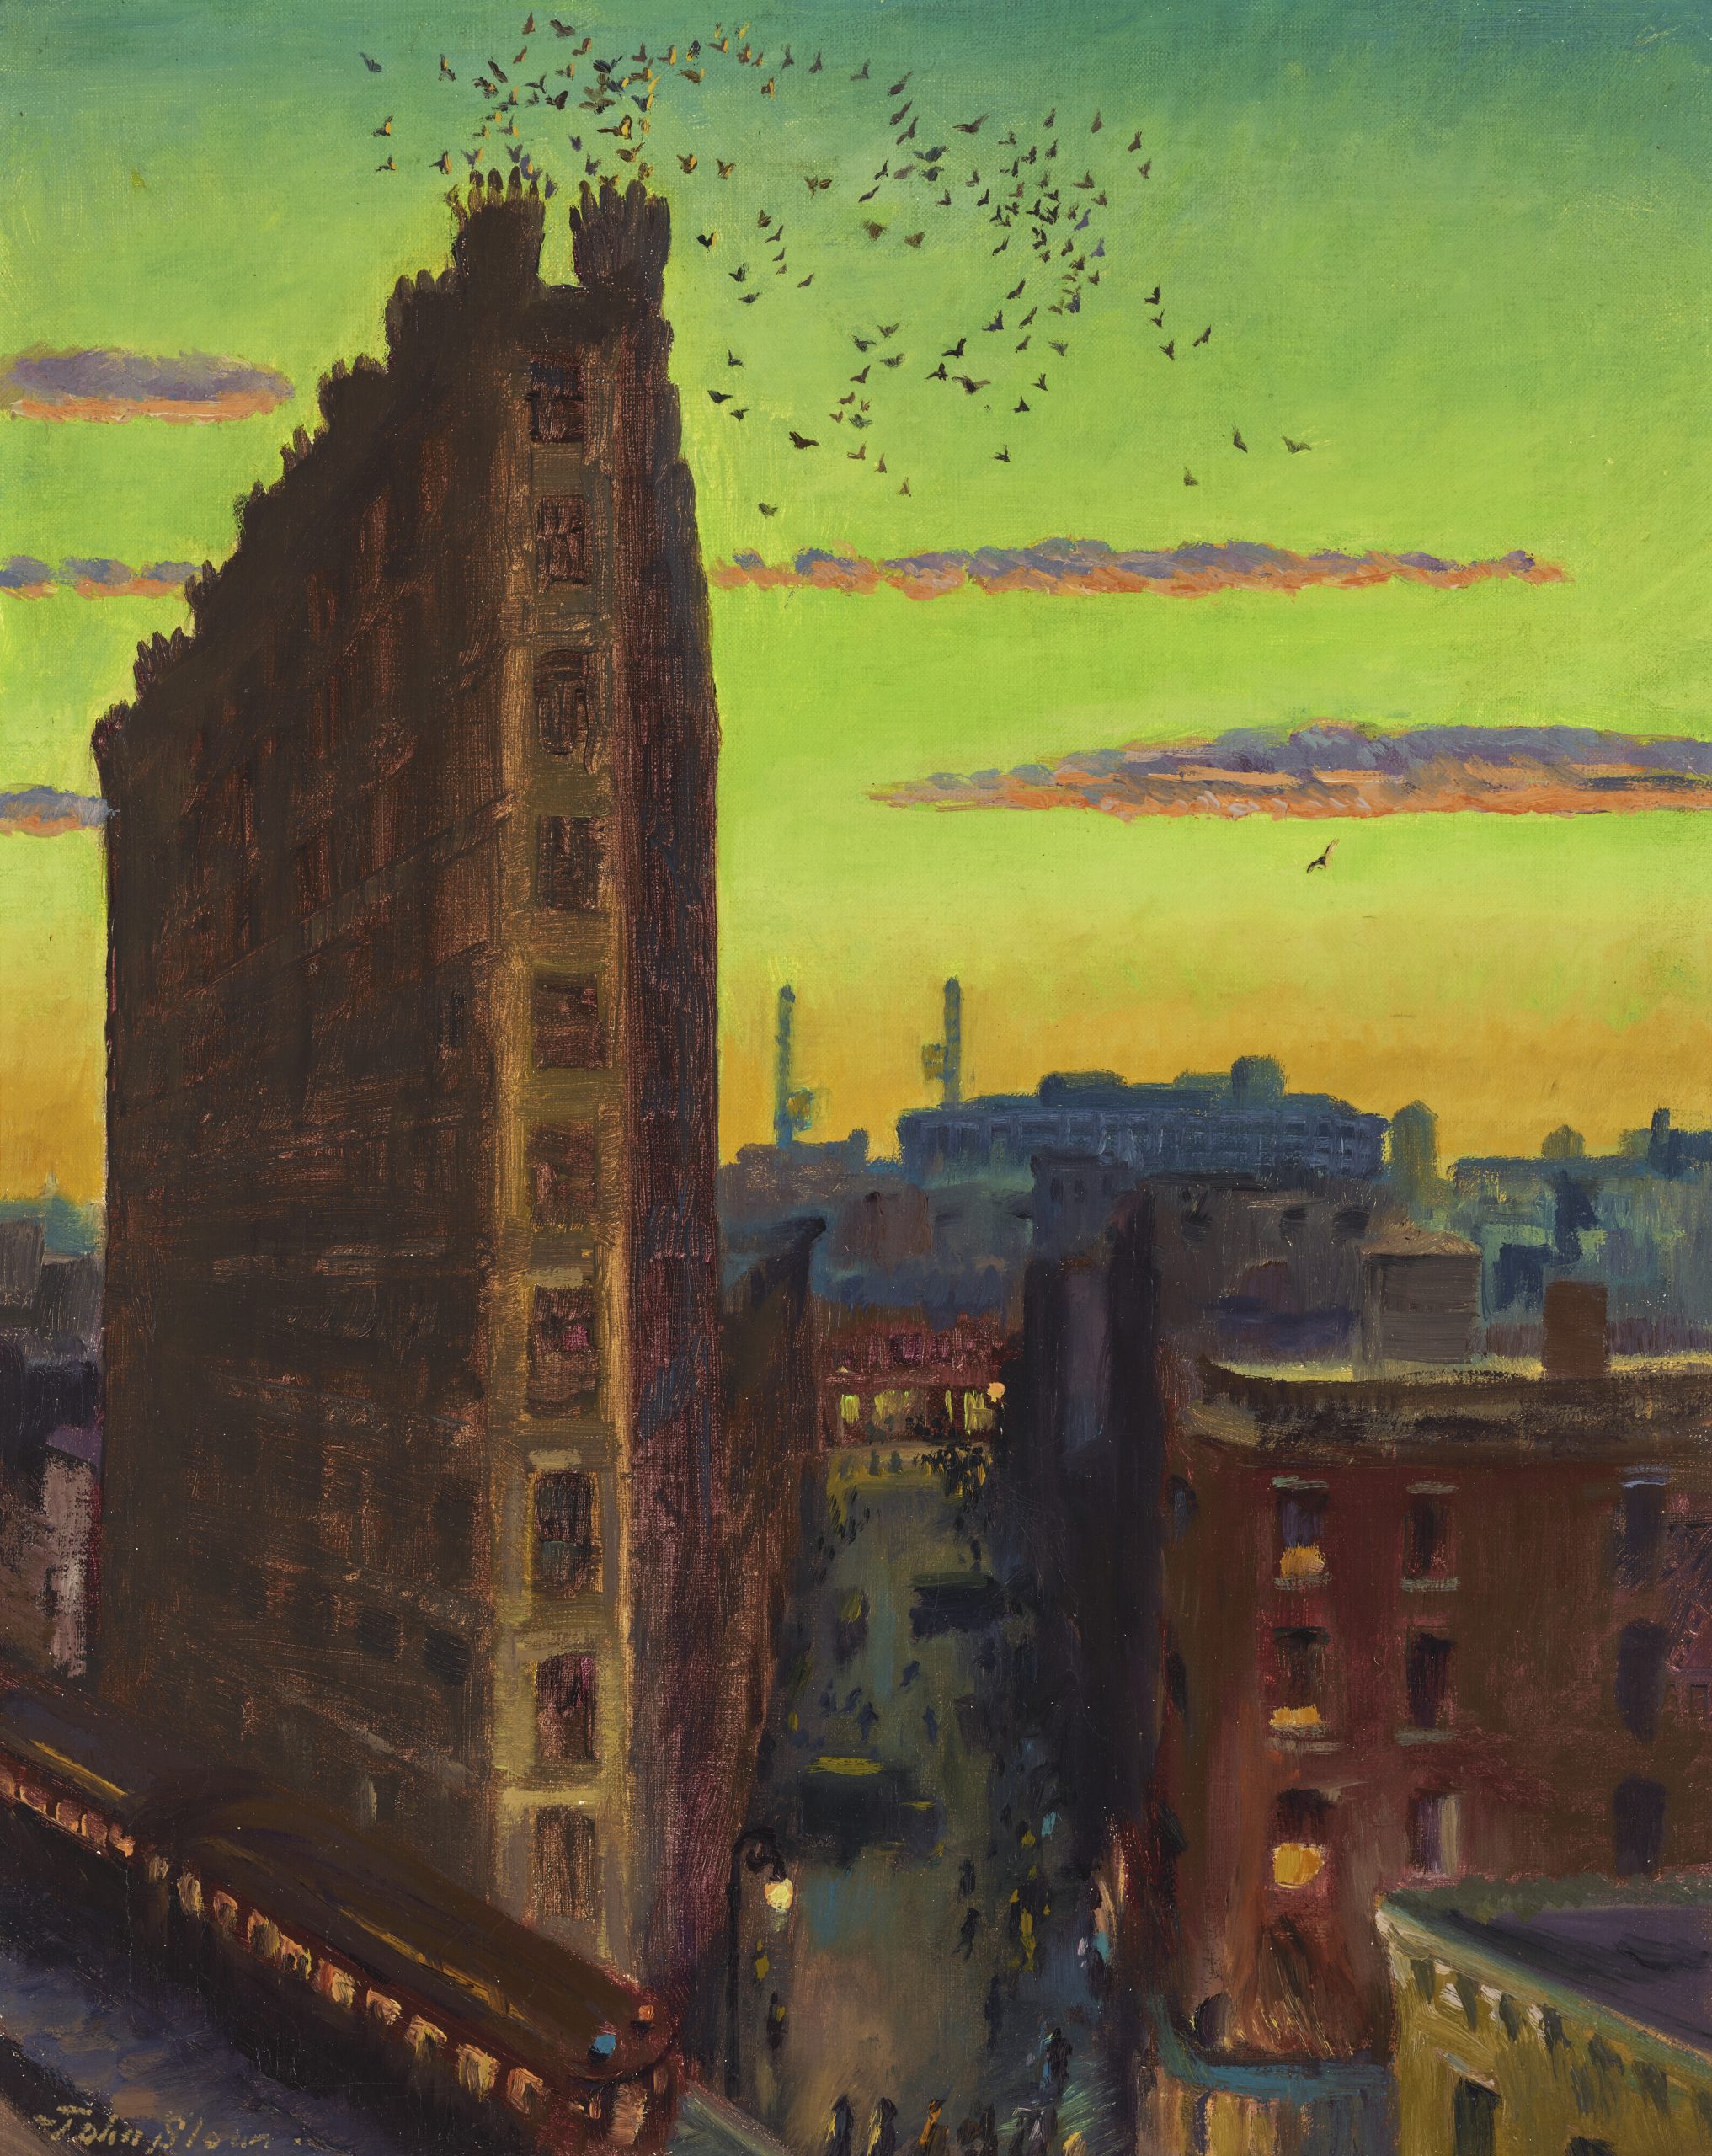 A New York street scene set against a sunset.